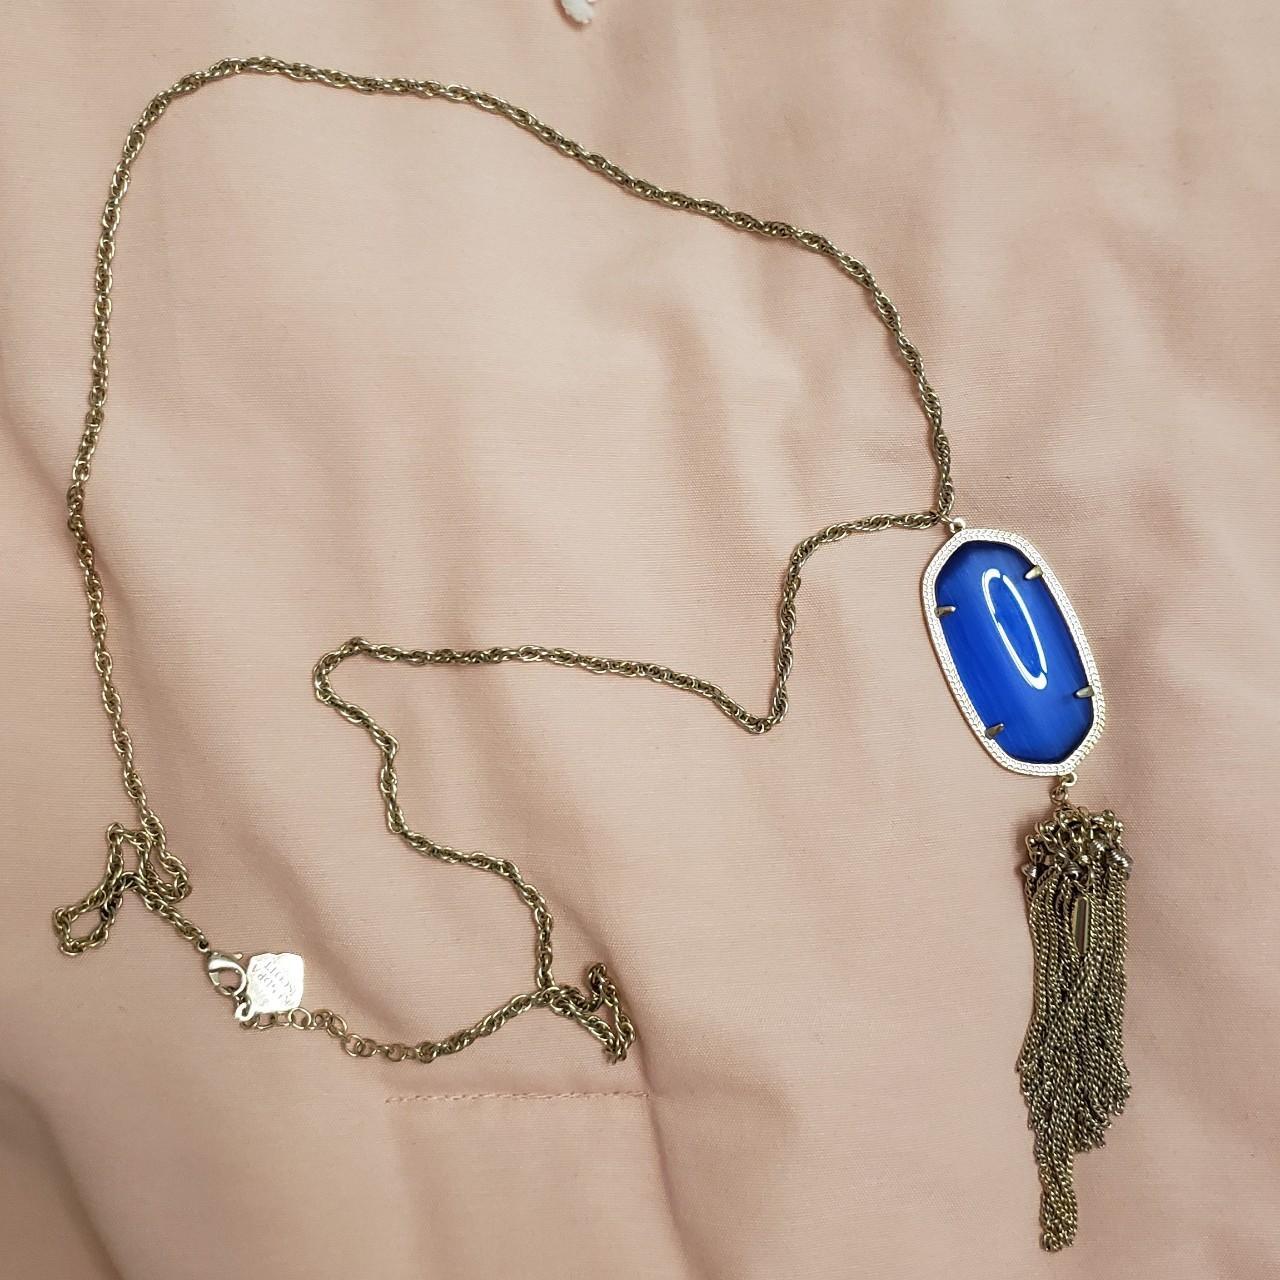 NWT Kendra Scott Rayne Cobalt Blue Tassel Pendant Necklace Gold Tone | eBay